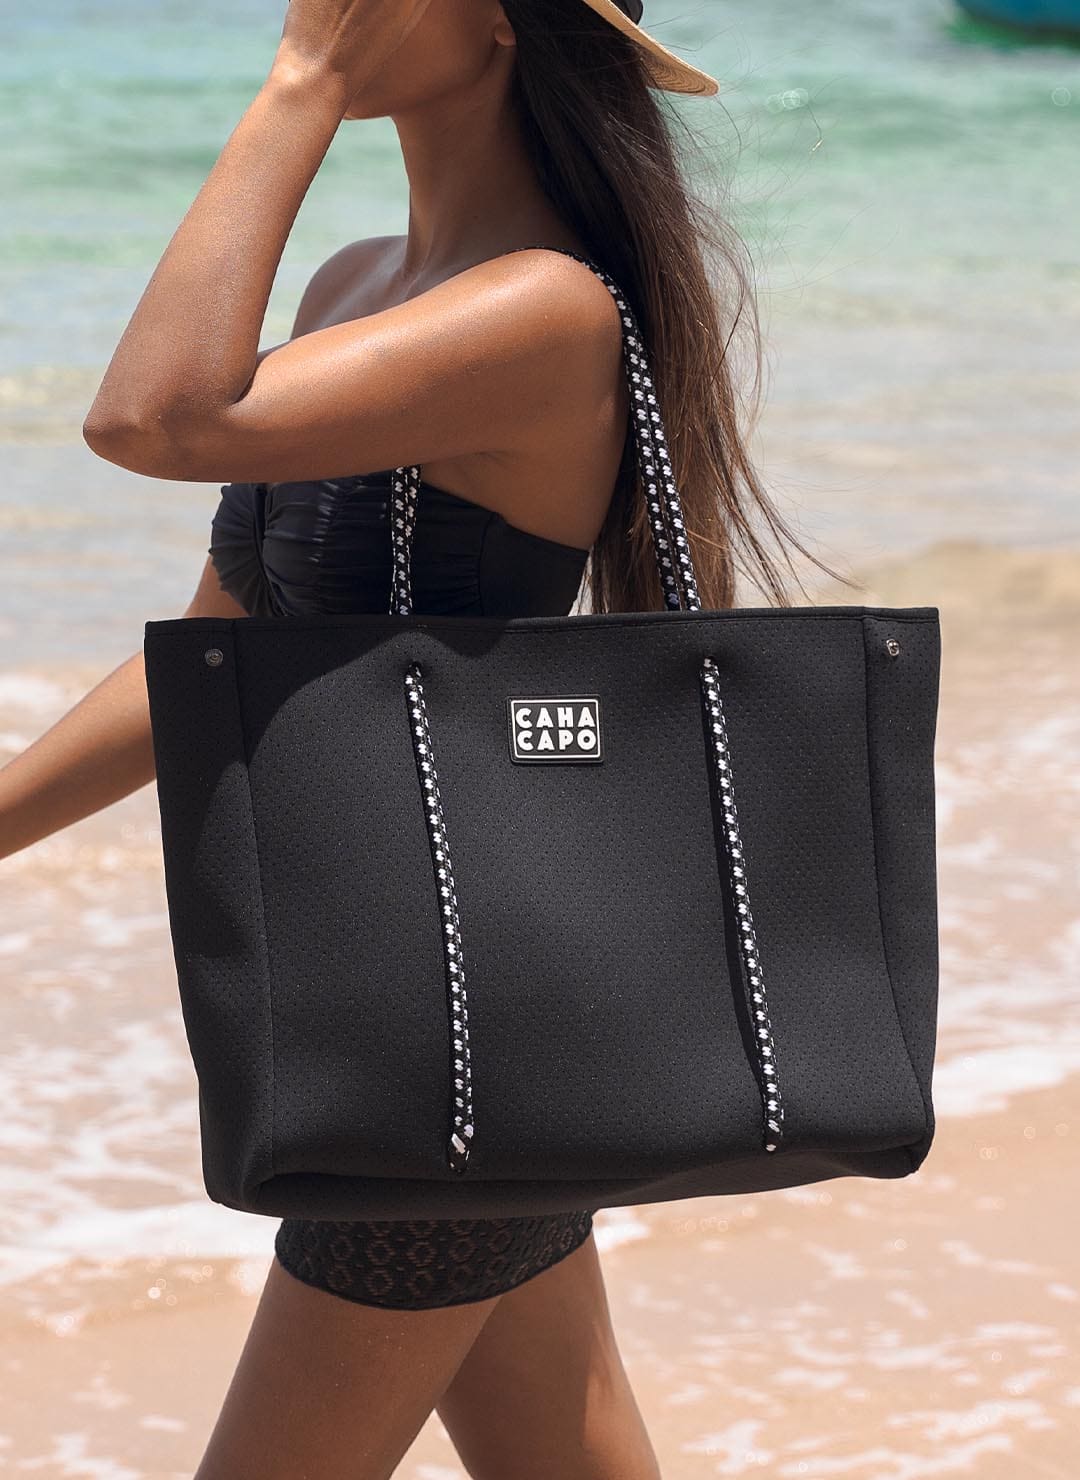 Beach Bag| accessories | Caha Capo